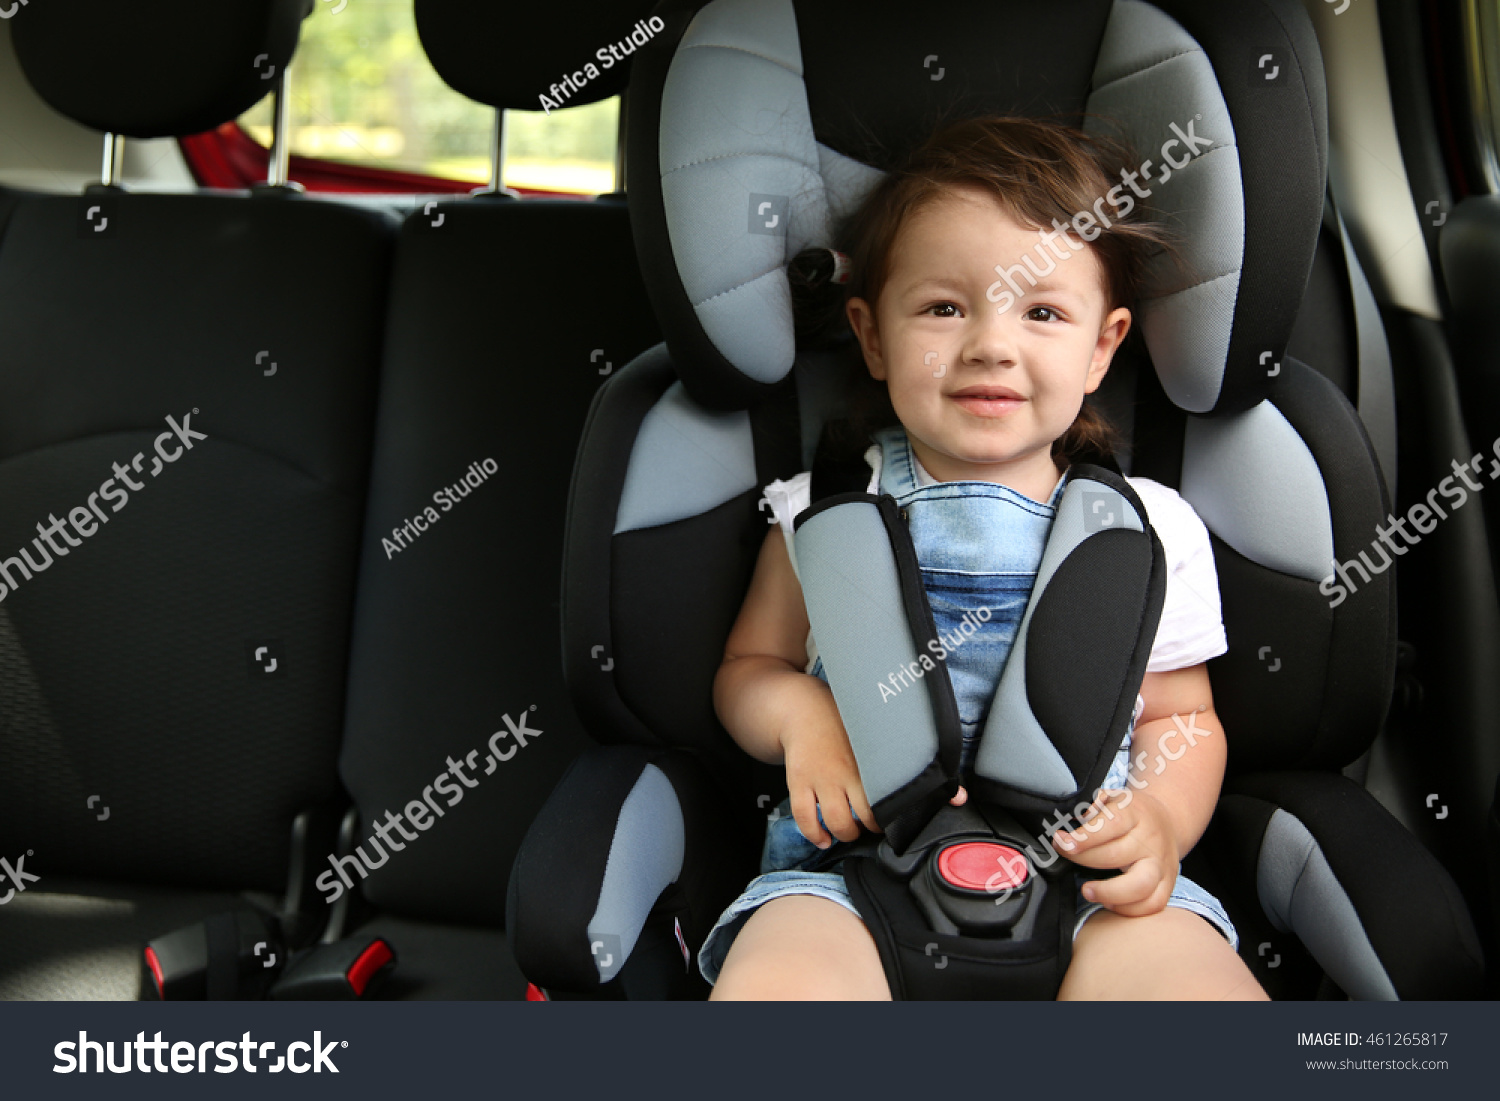 Boy sitting in a car in safety chair #461265817